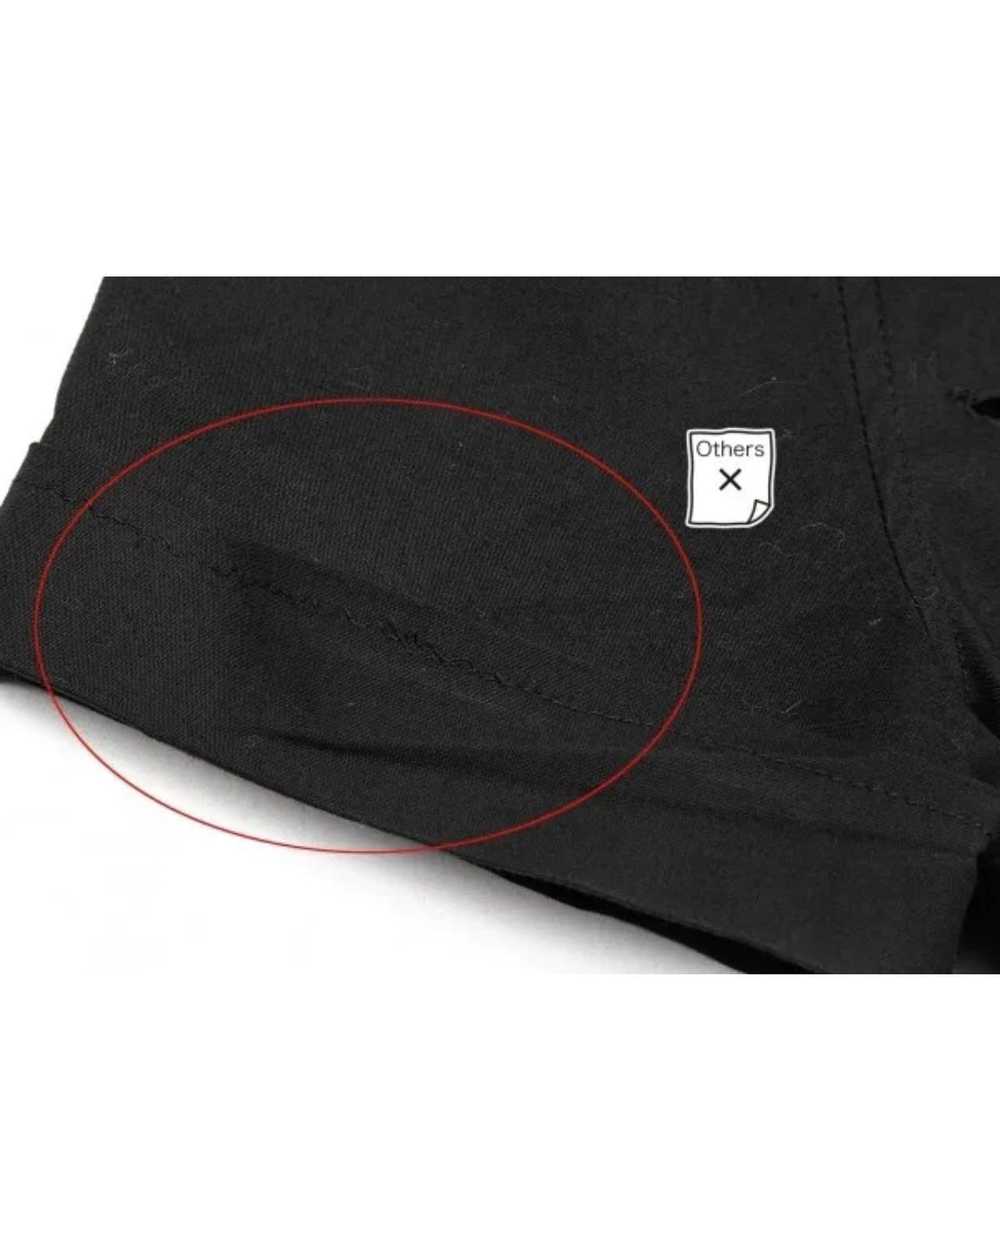 Jean Paul Gaultier Laser-Cut Zip-Up Shirt - image 8